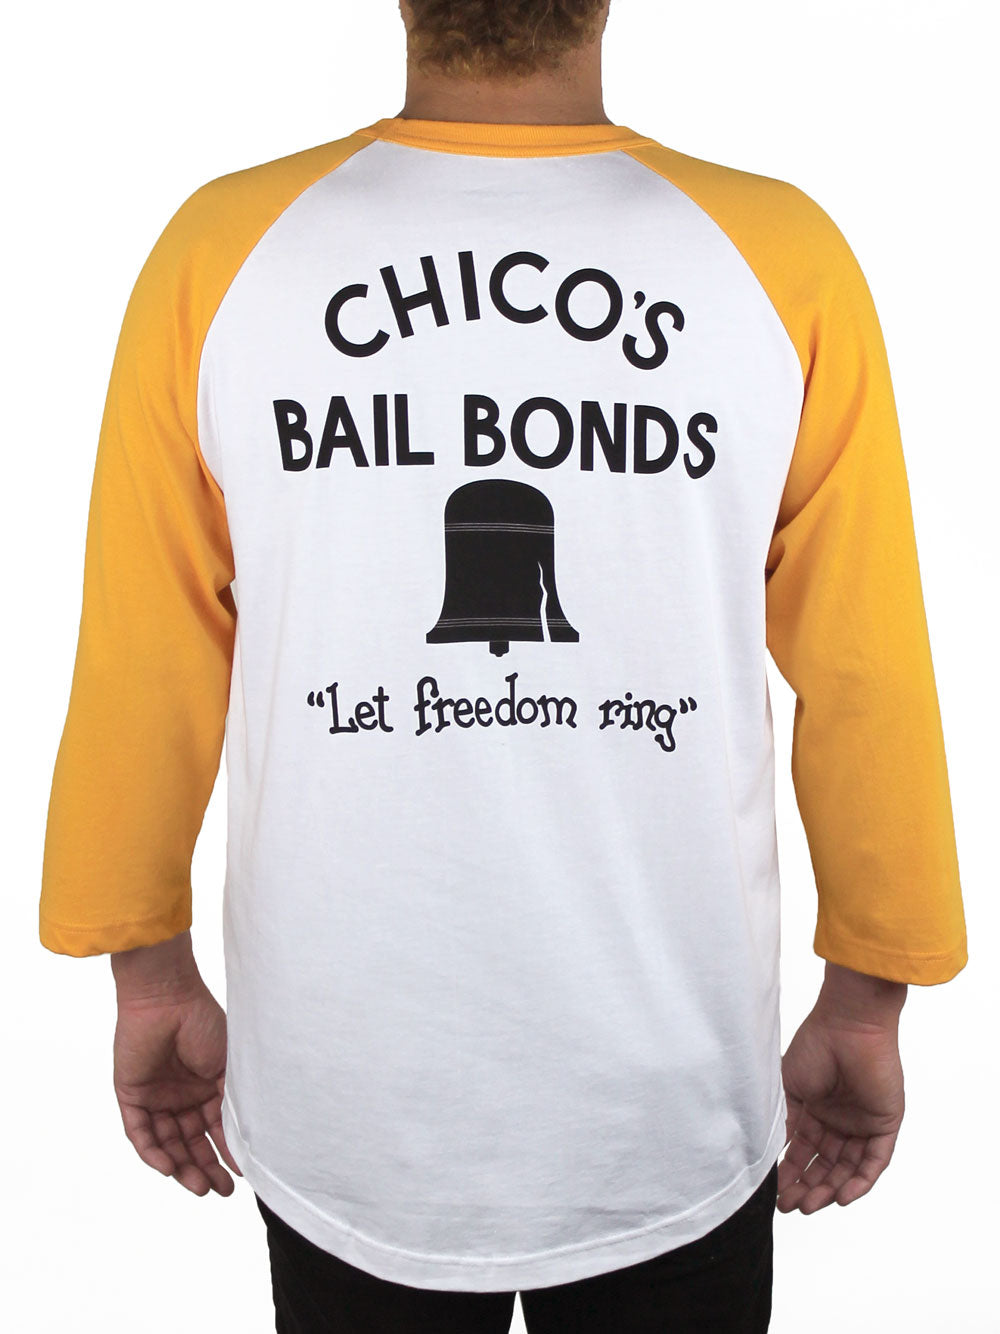 Chico's Bail Bonds Shirt Back View